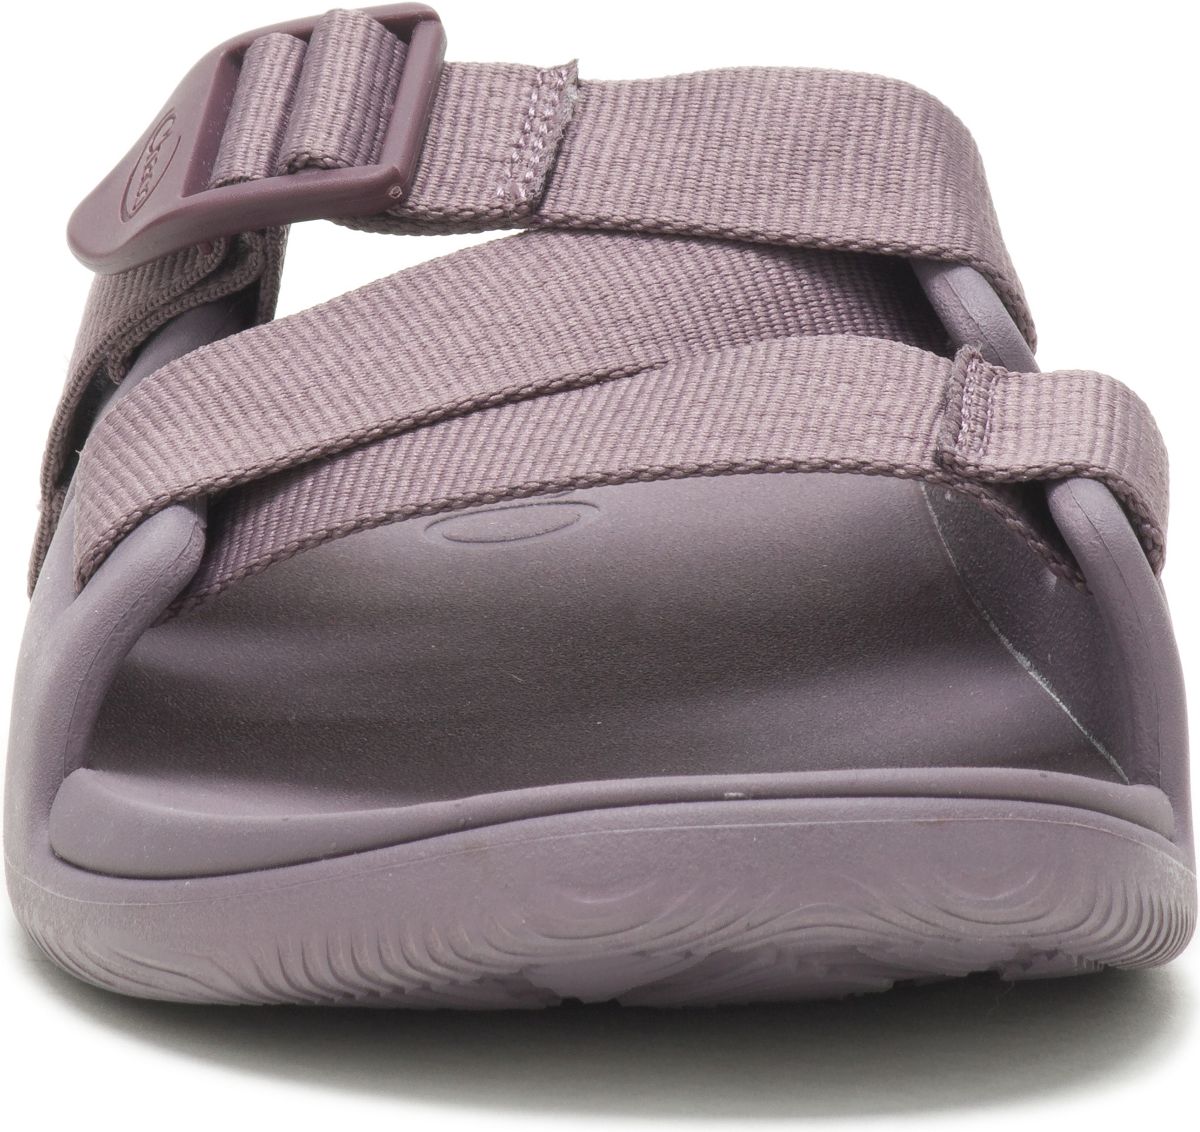 Women's Chillos Slide Sandals | Chaco